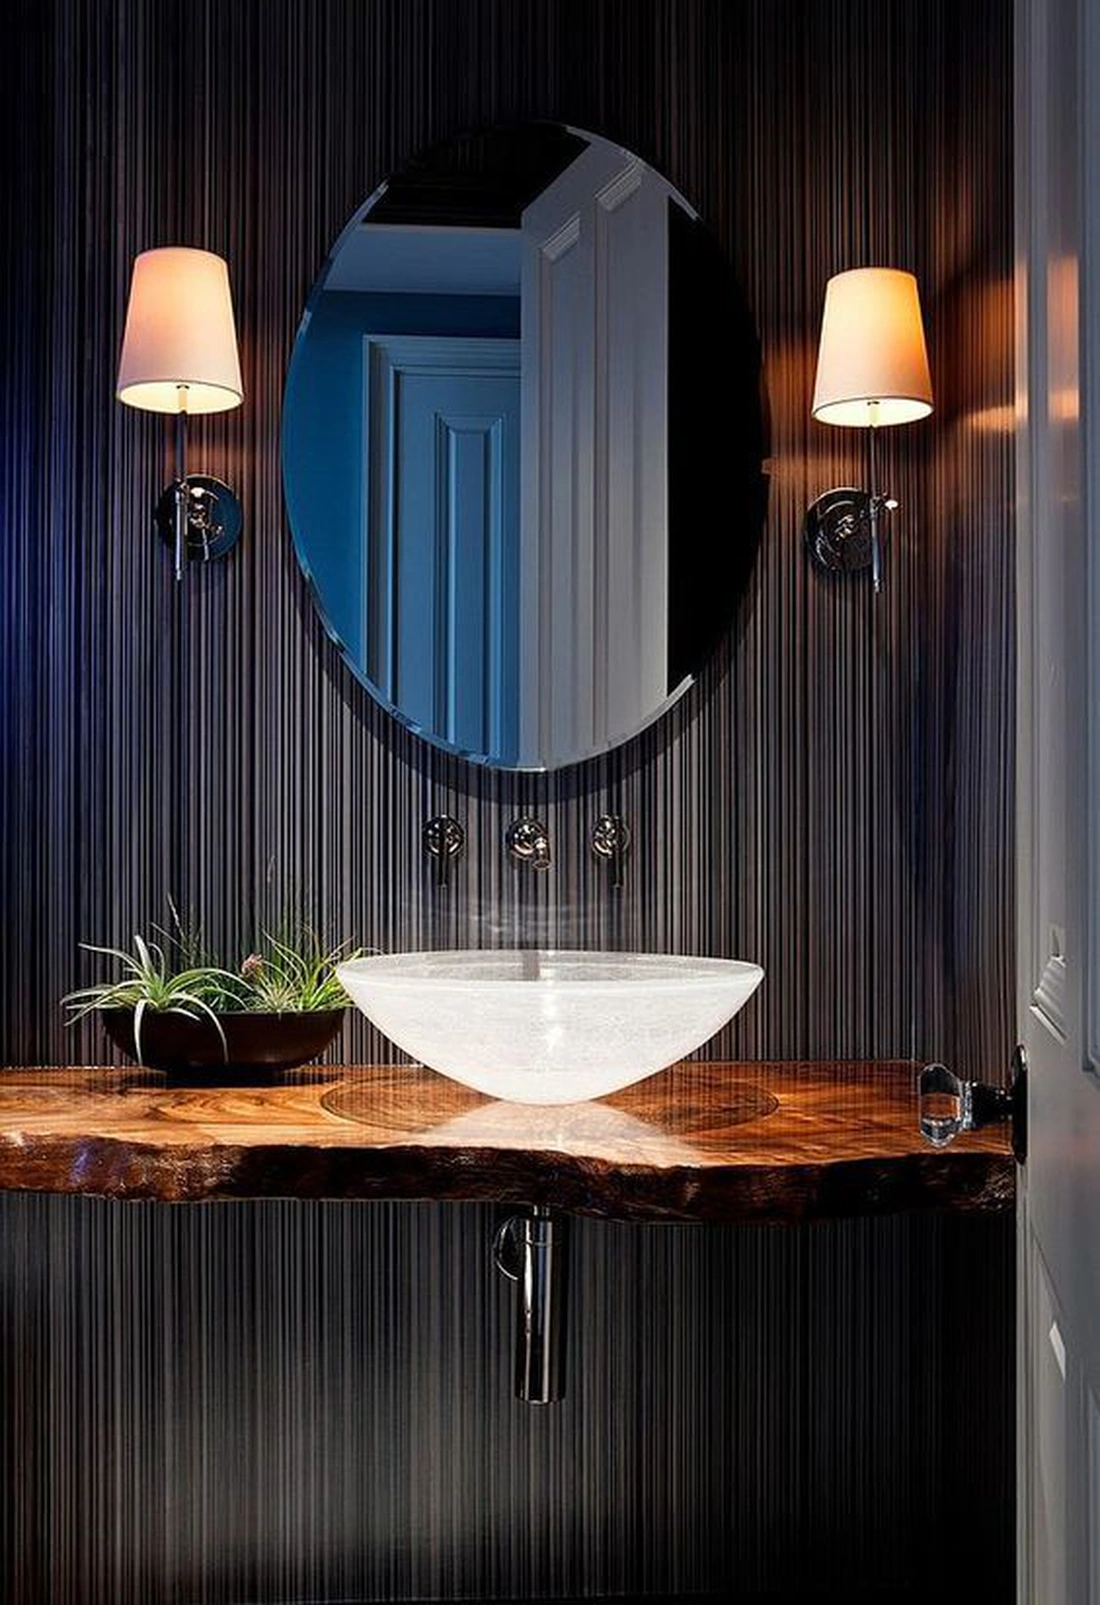 Tropical bathroom design